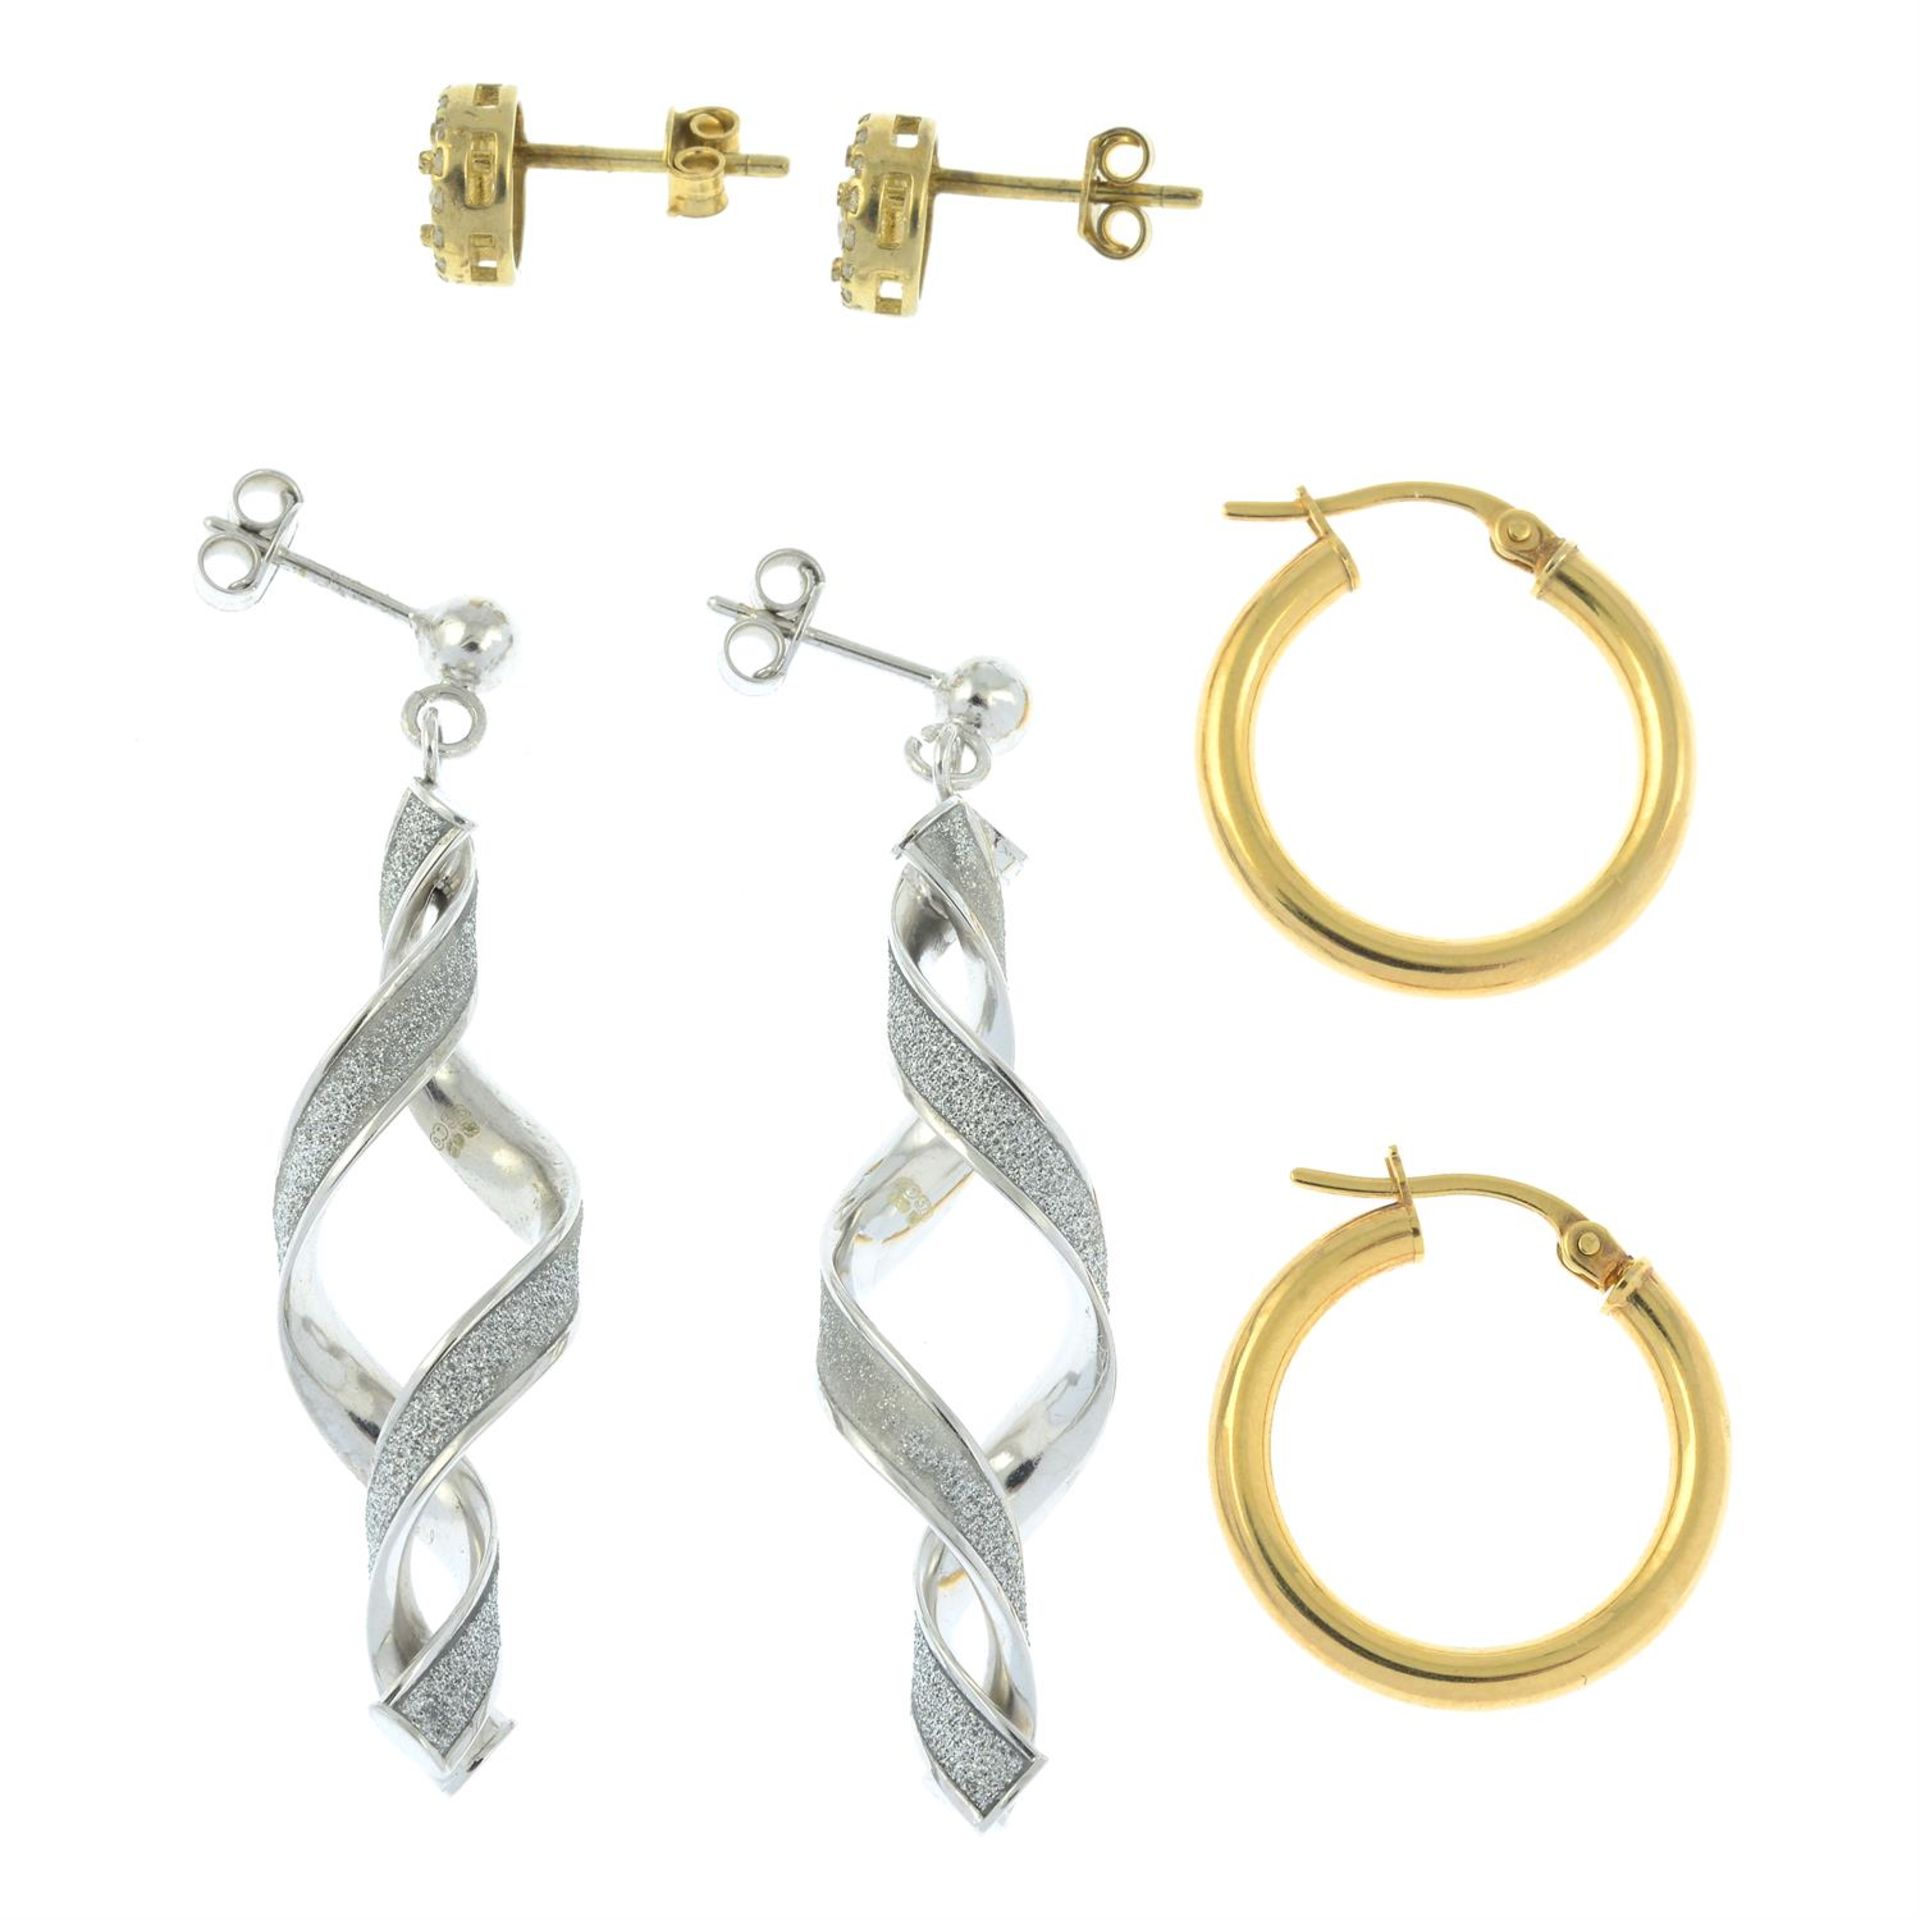 Three pairs of earrings. - Image 2 of 2